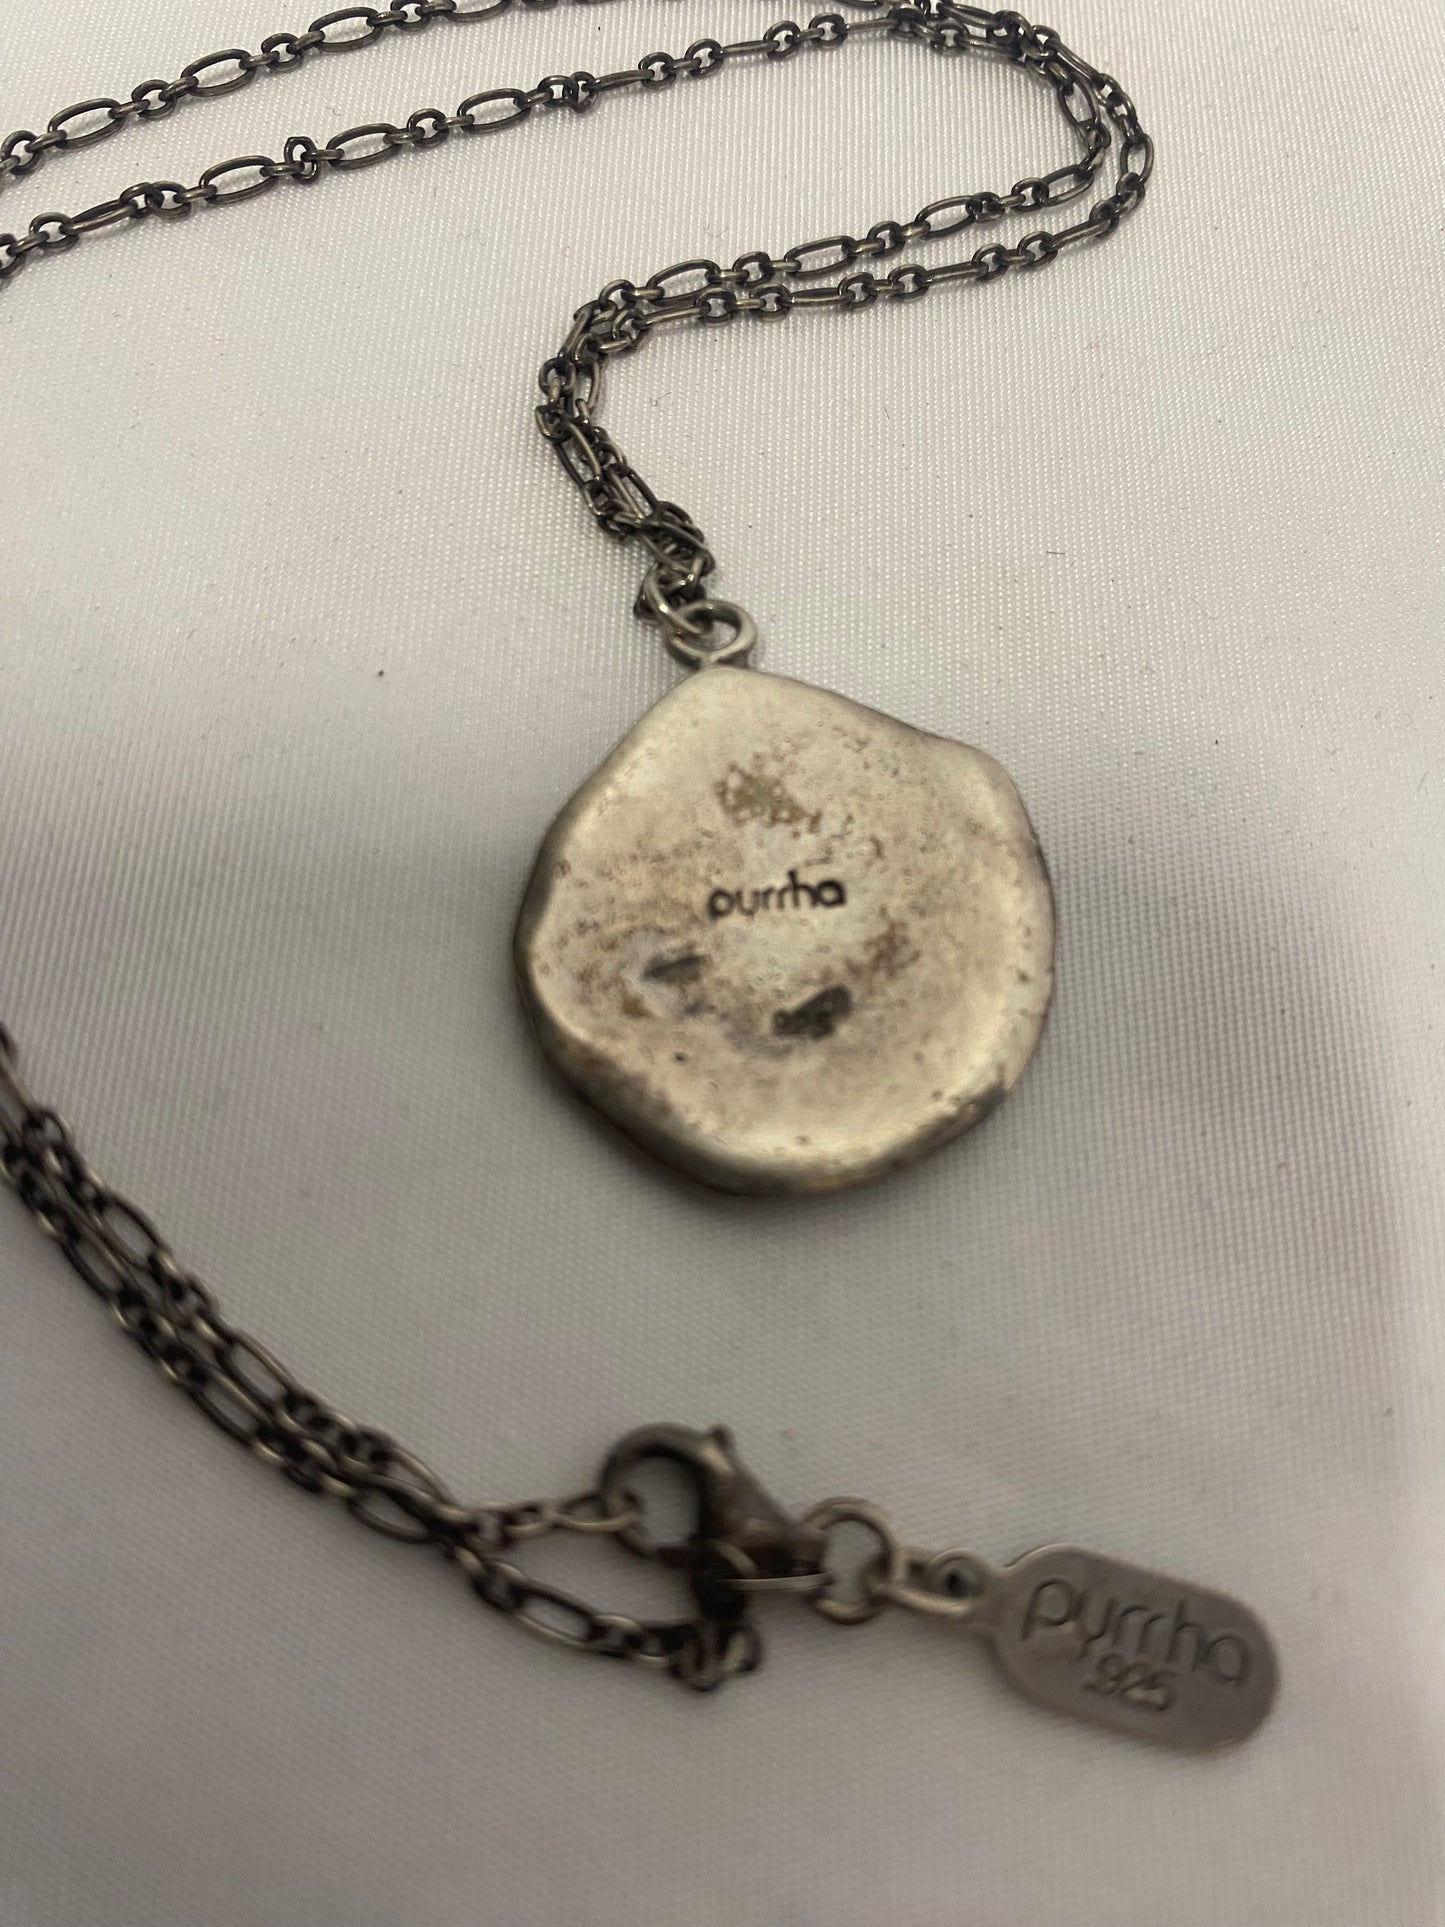 Pyrrha Winged Heart 925 Silver Talisman Necklace With Medium Anchor Chain